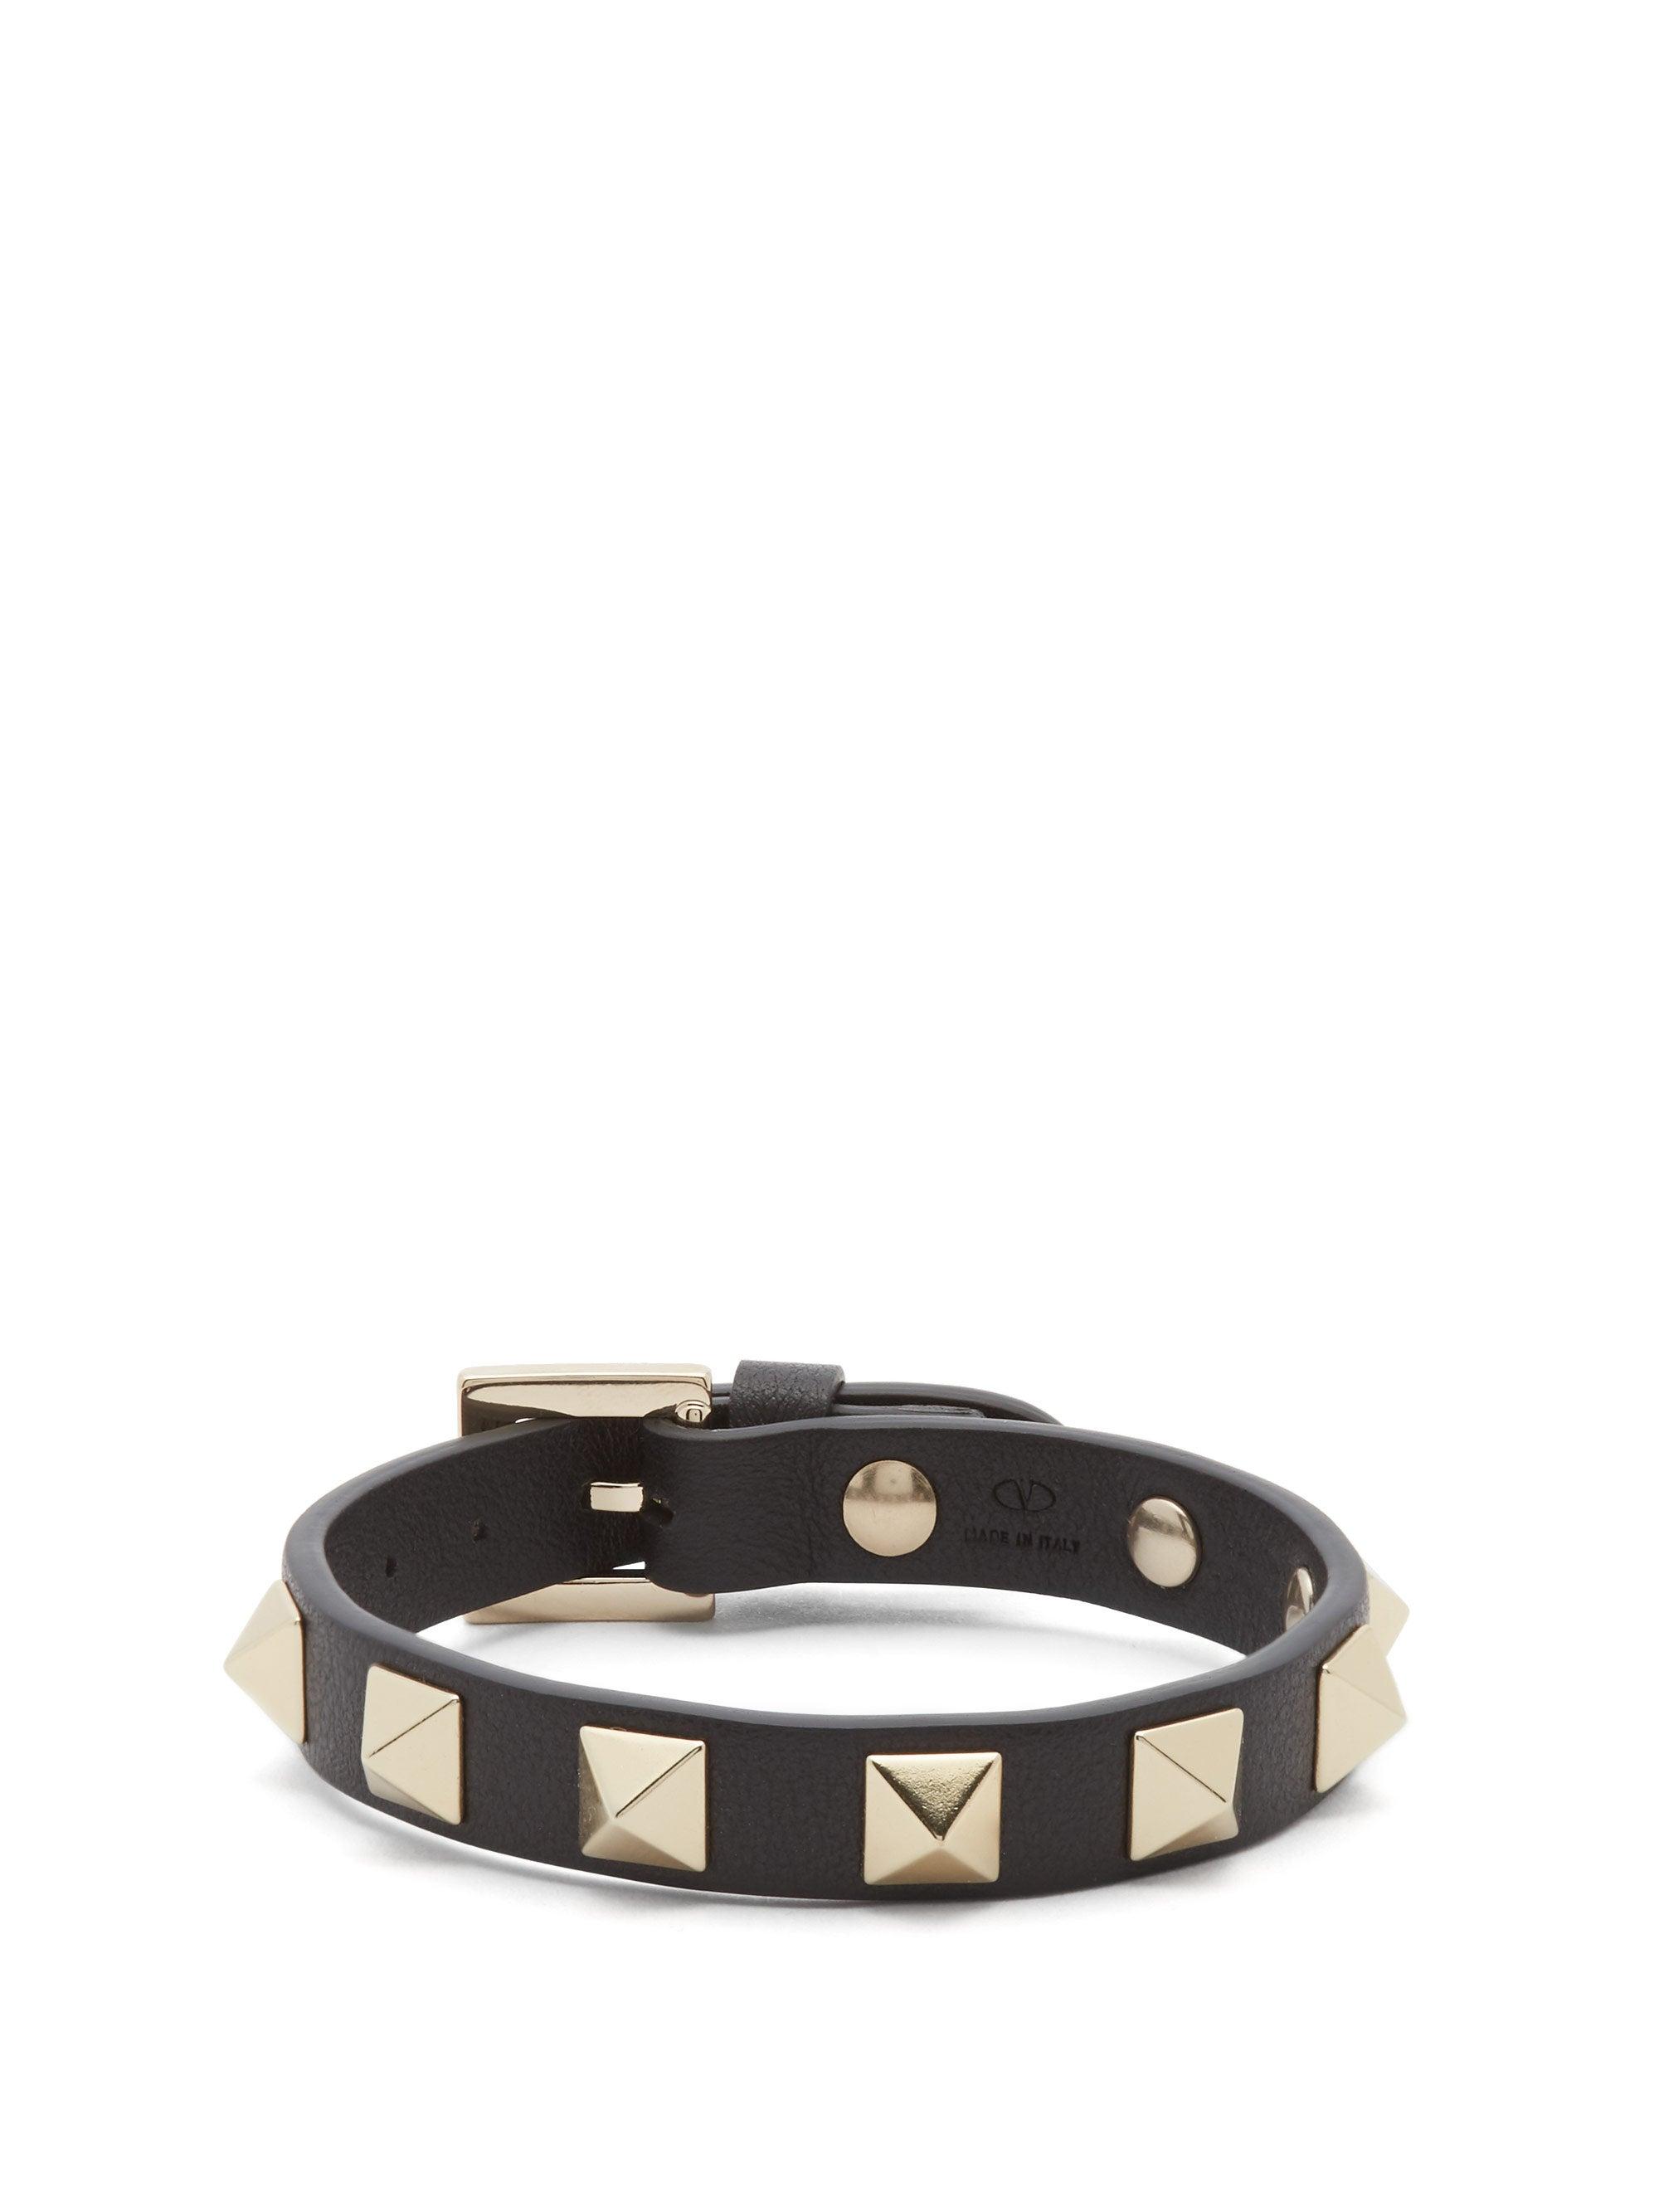 Valentino Garavani Rockstud Leather Bracelet in Black - Lyst